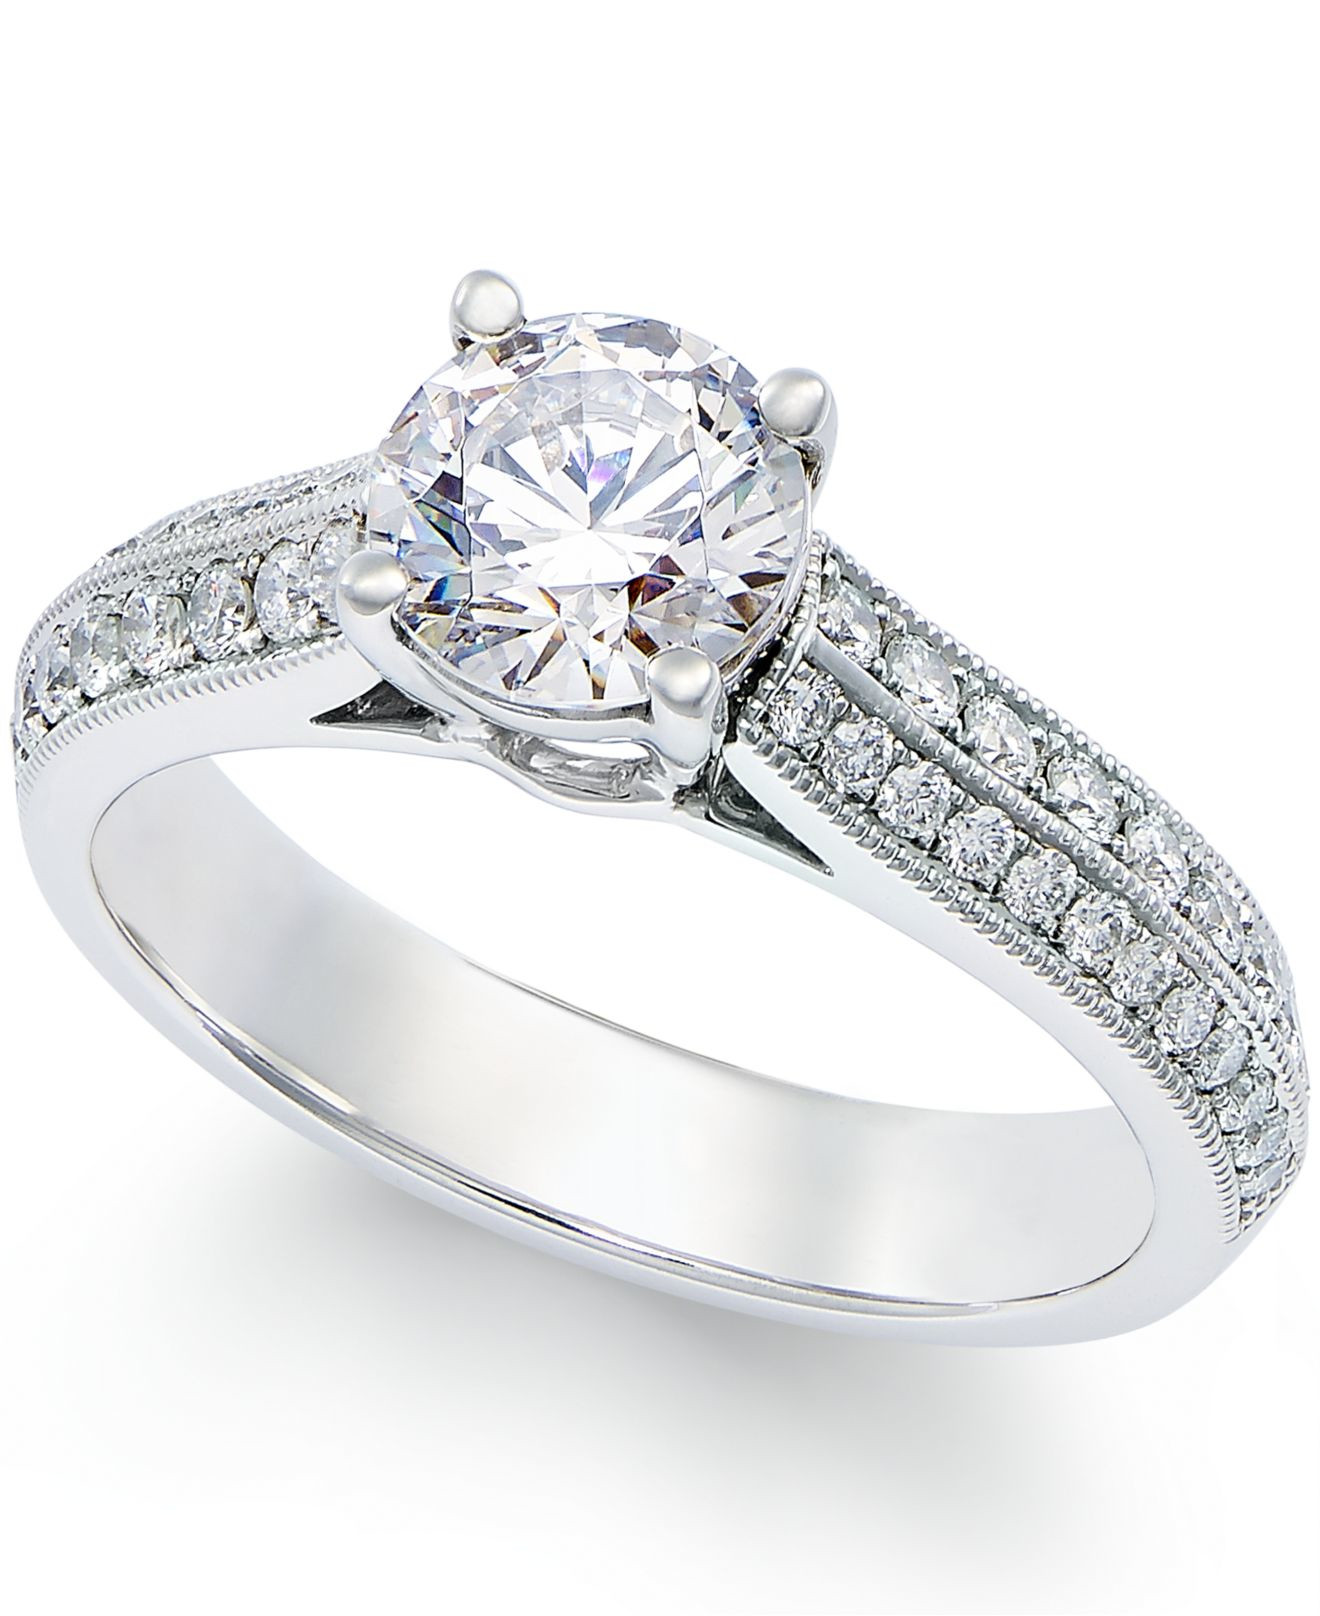 Macys Diamond Rings
 Macy s Diamond Certified Engagement Ring In Platinum 1 3